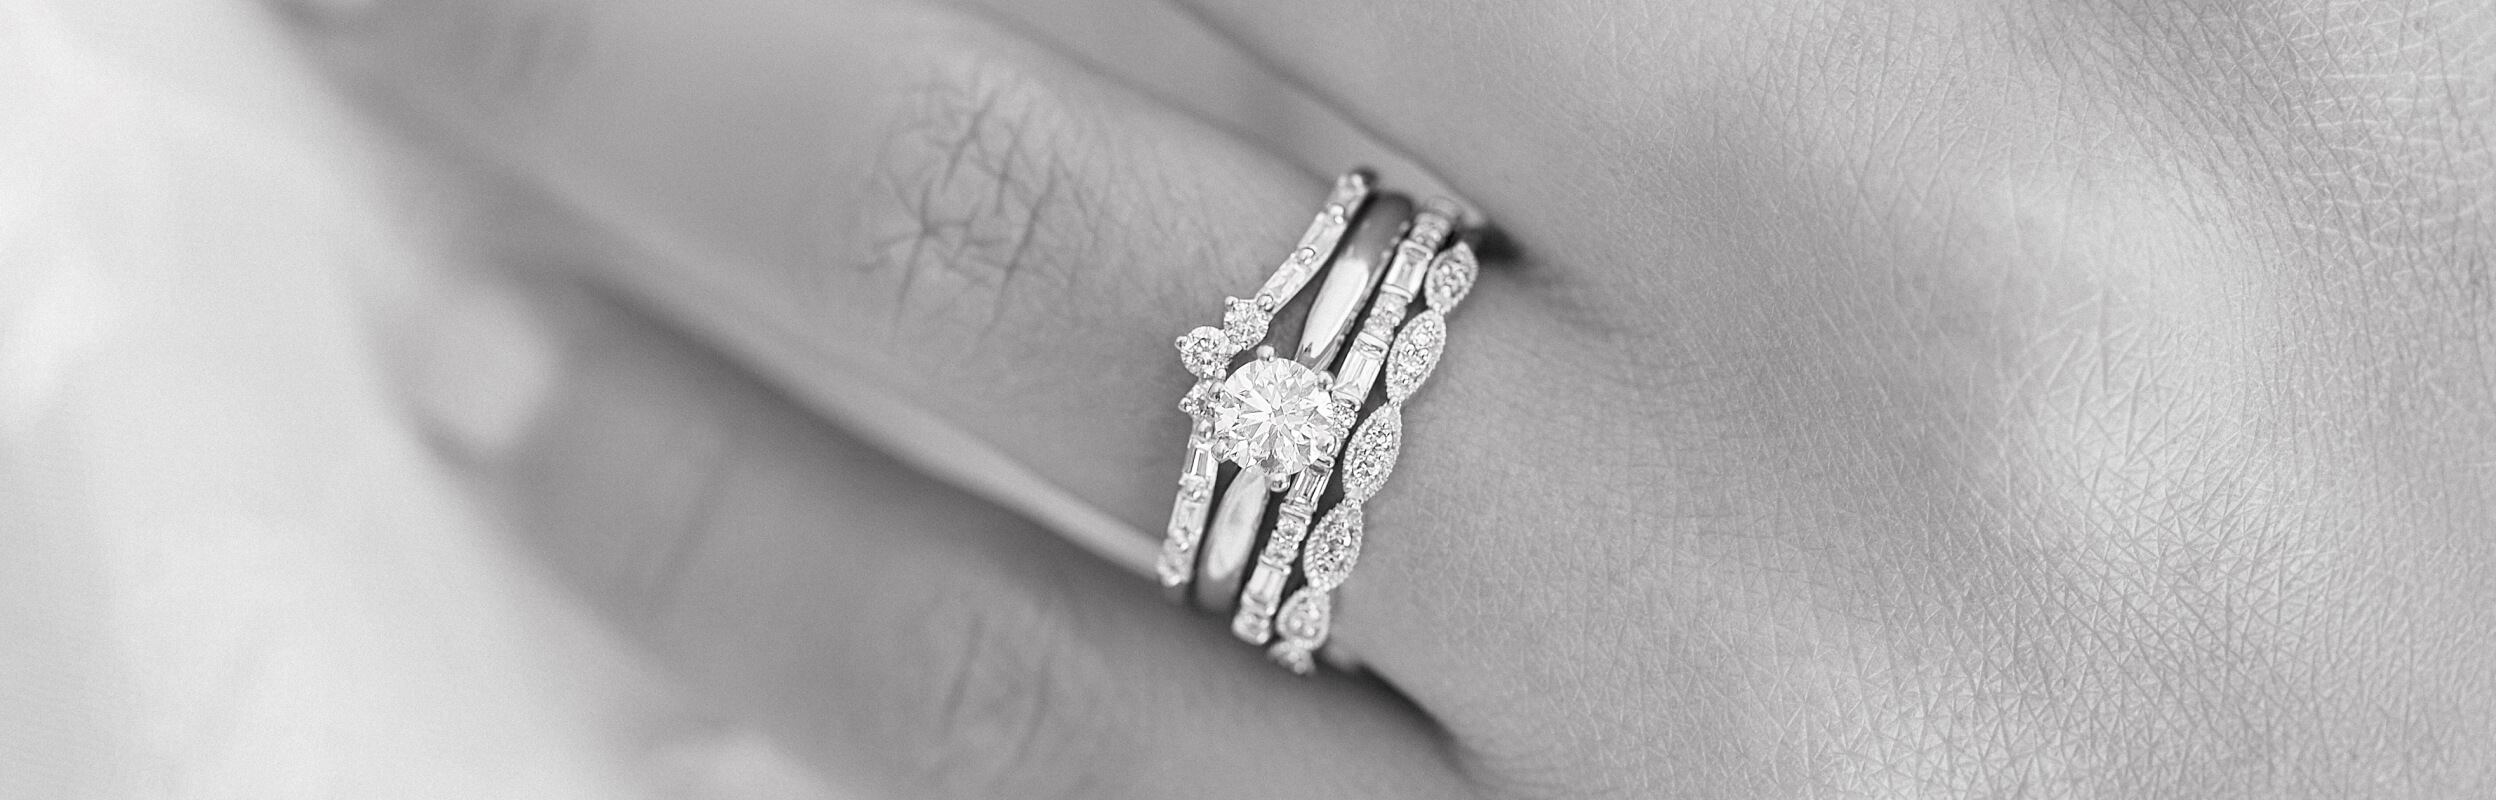 Evermore Bridal diamond ring set